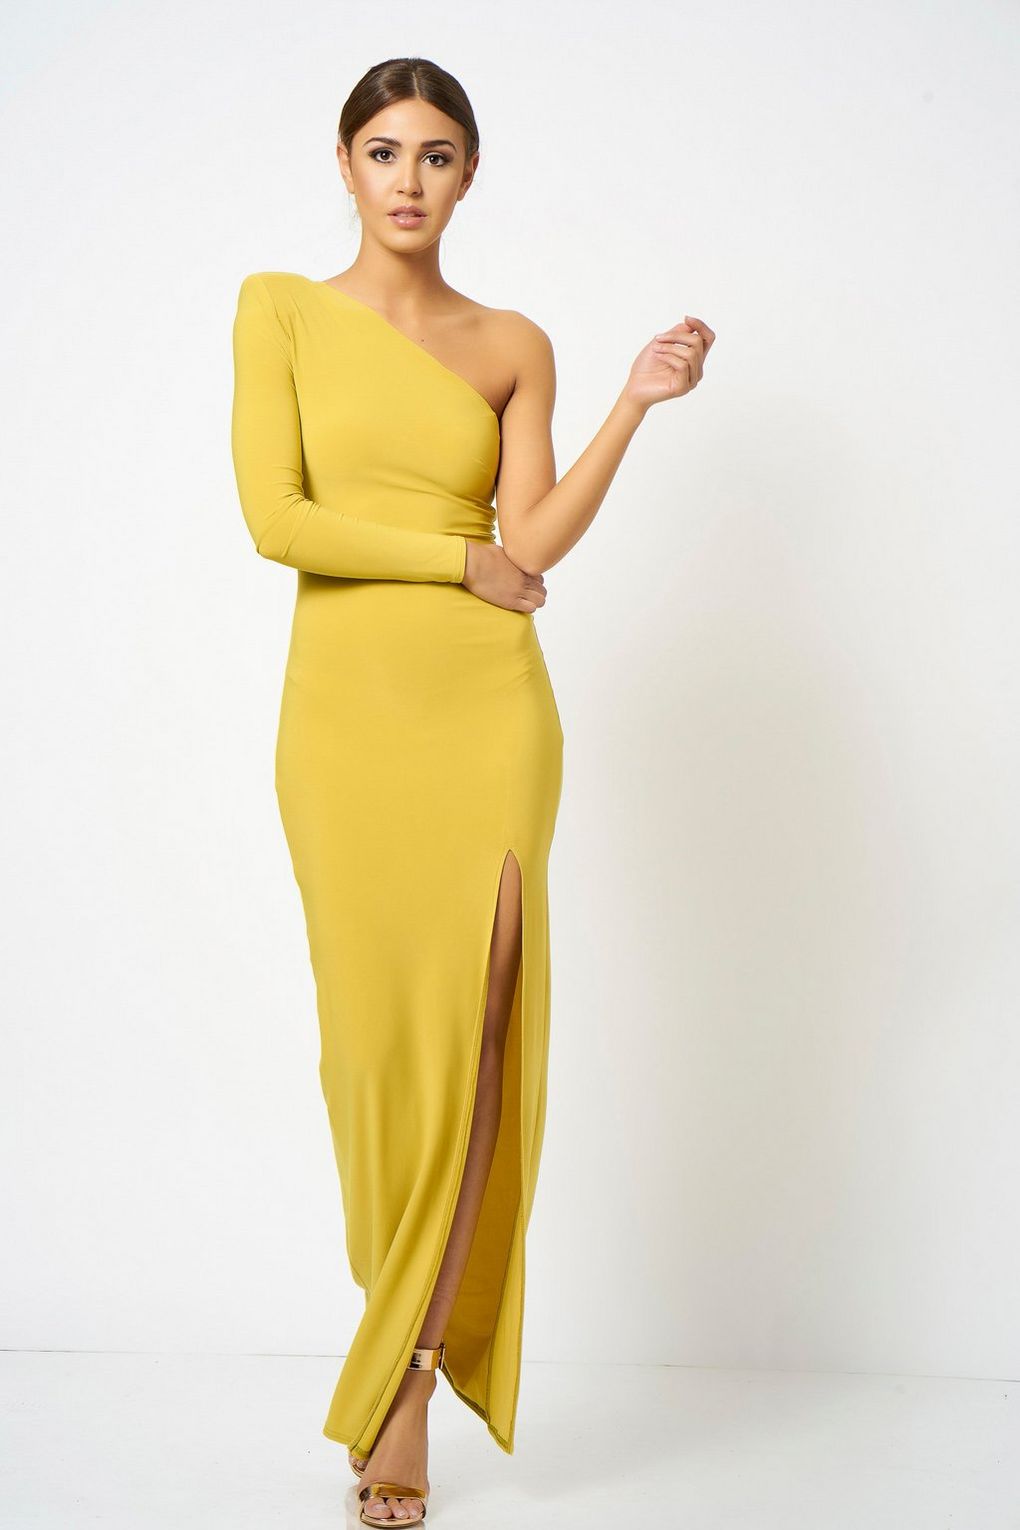 Topshop One Shoulder Yellow Mustard Maxi Dress by Club L London - Liyanah